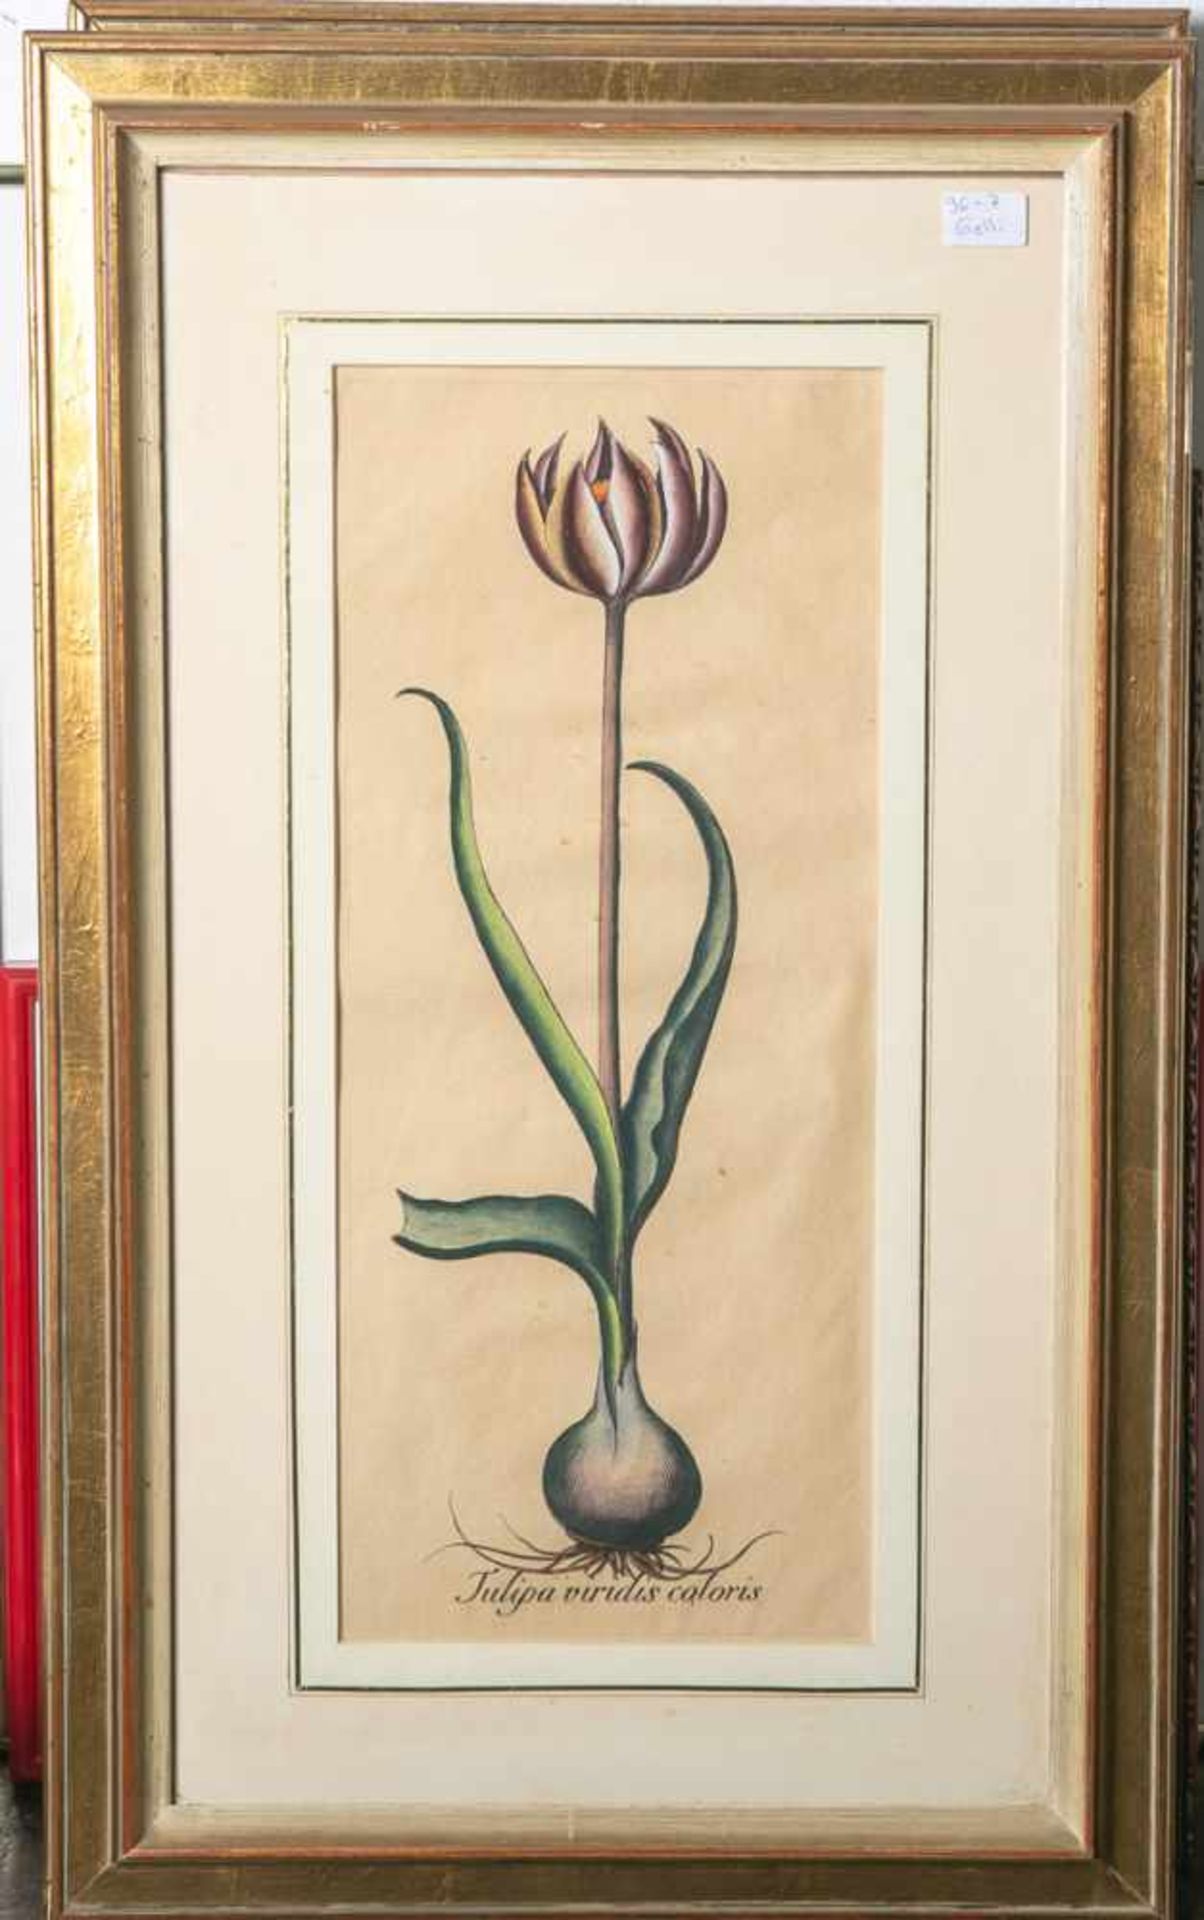 wohl Bessler (18. Jahrhundert), Tulipa viridis coloris, kolorierter Kupferstich,Blattgröße ca. 46